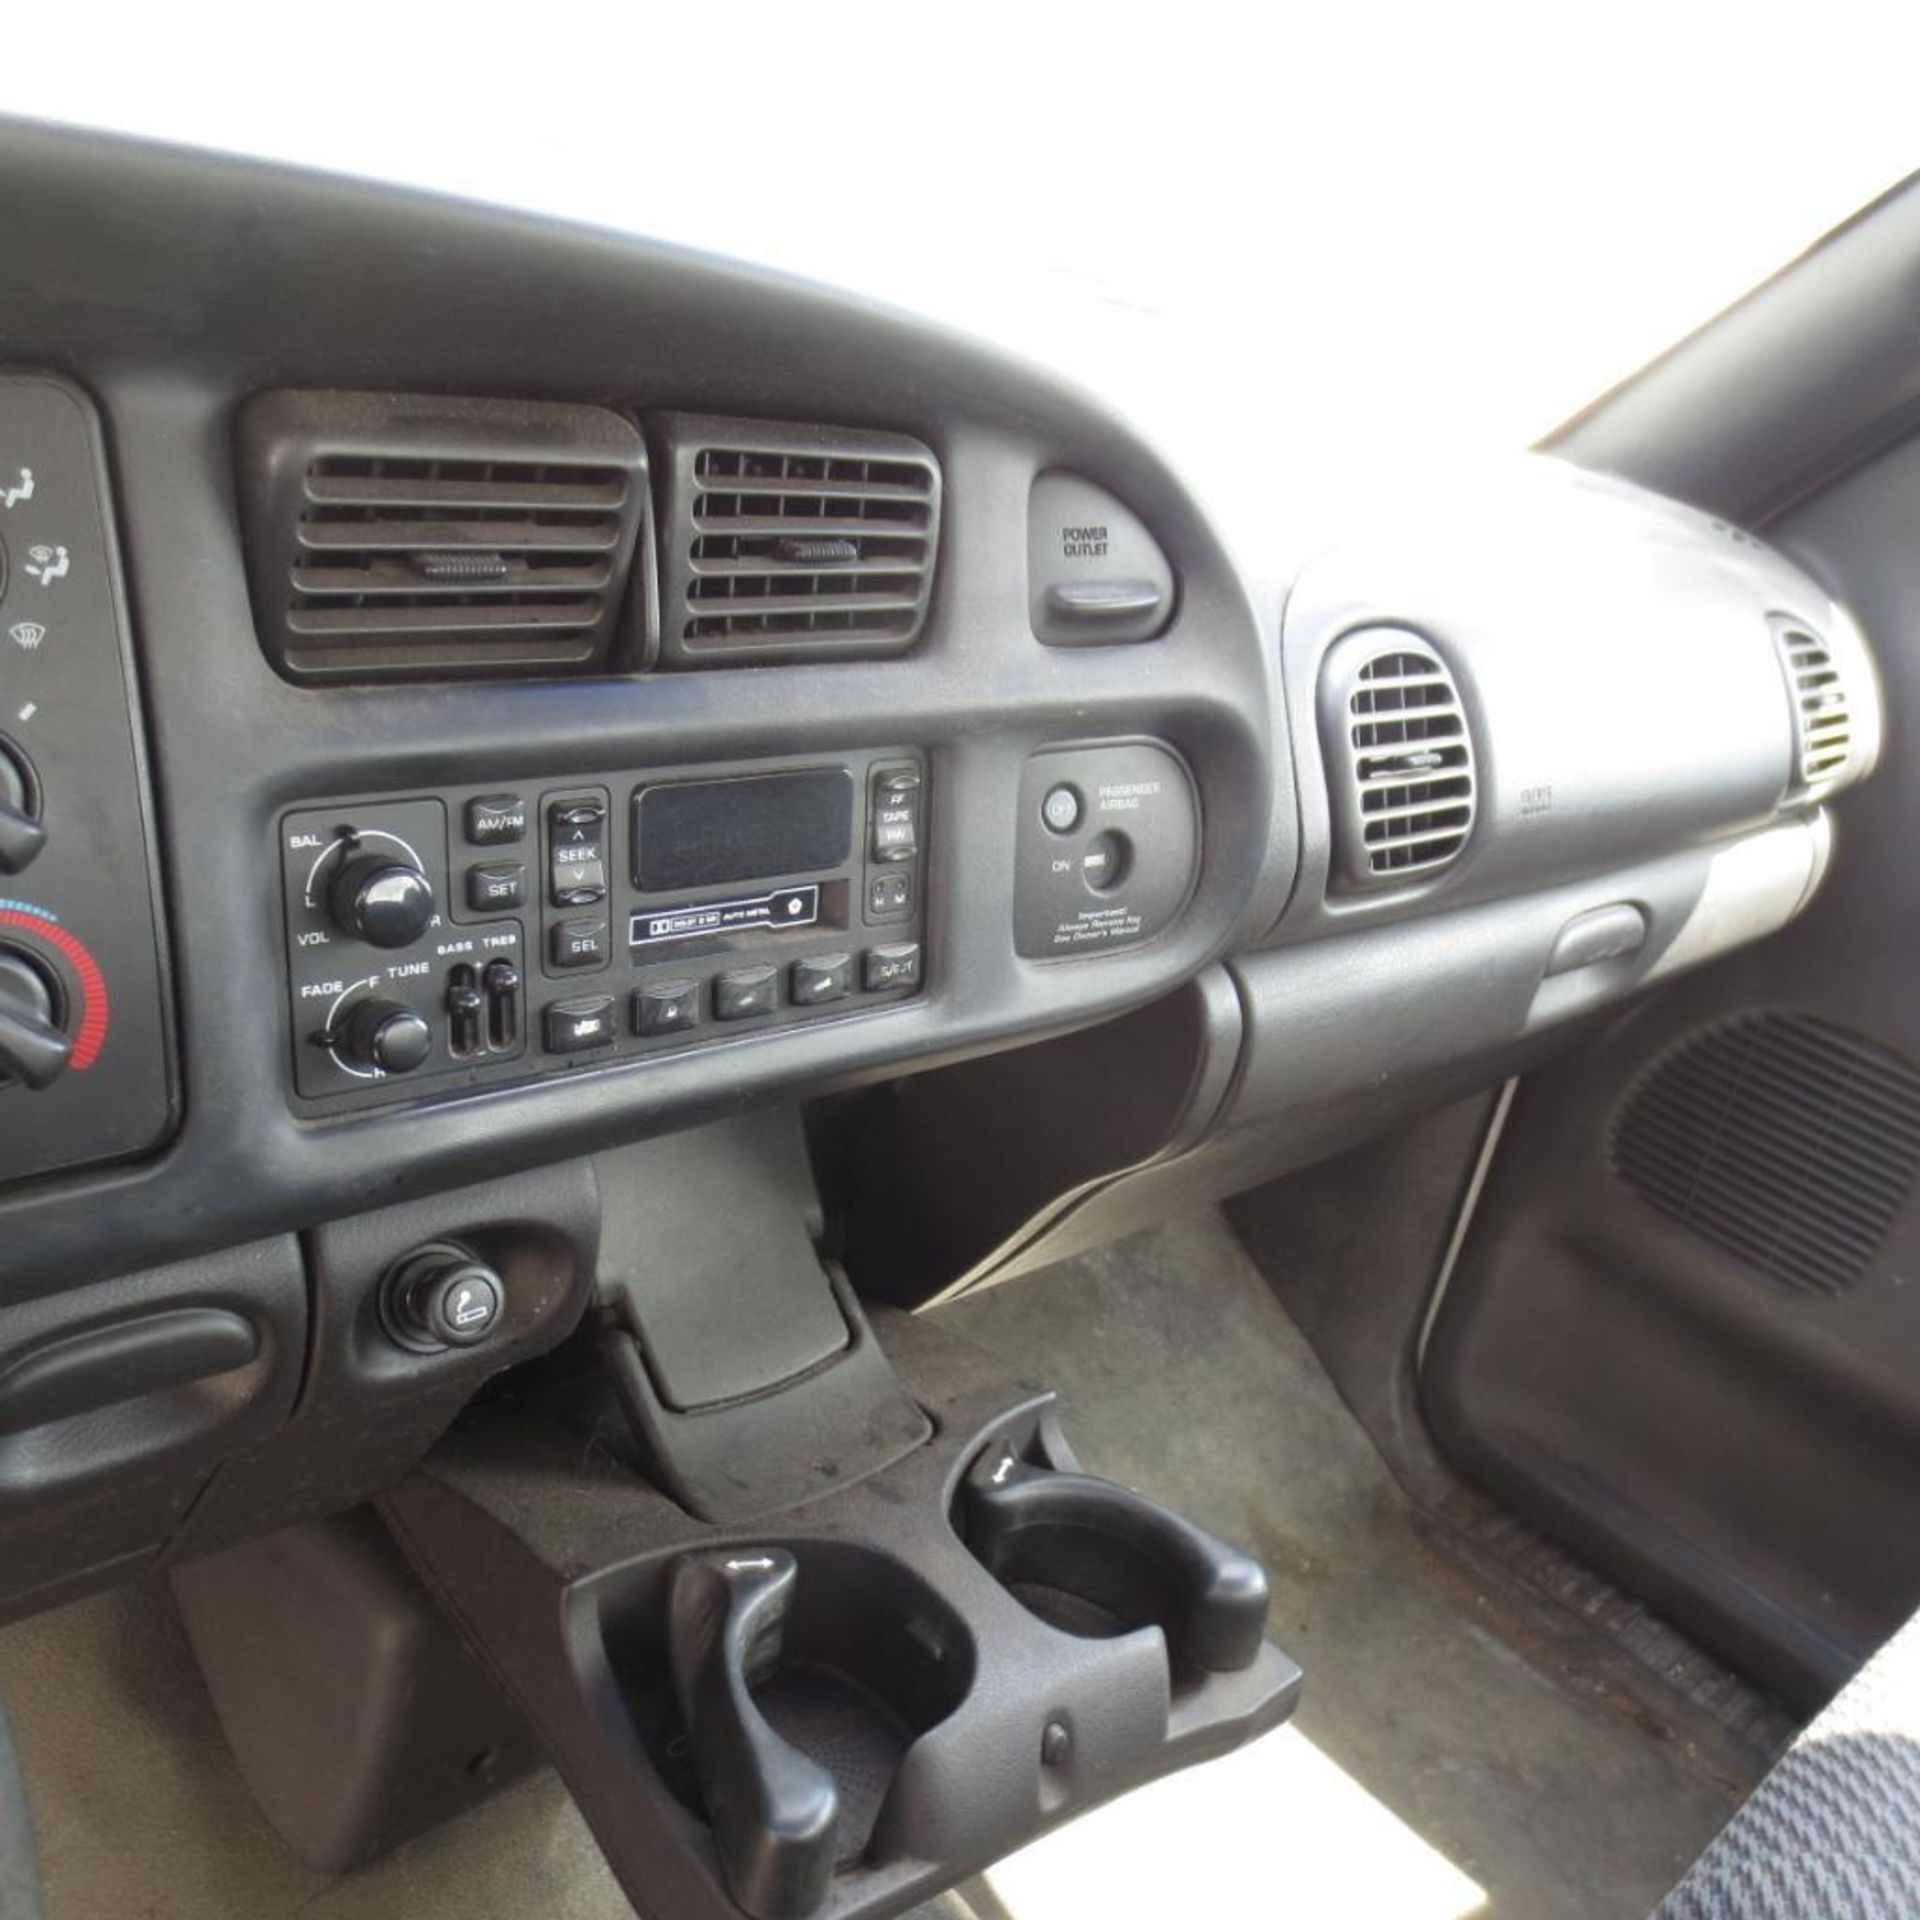 Dodge Ram 1500 Standard Cab Pickup Truck Vin: 1B7HC16Y0WS744787 (1998), 5.2L V-8, A/T, 124,739 Miles - Image 27 of 29